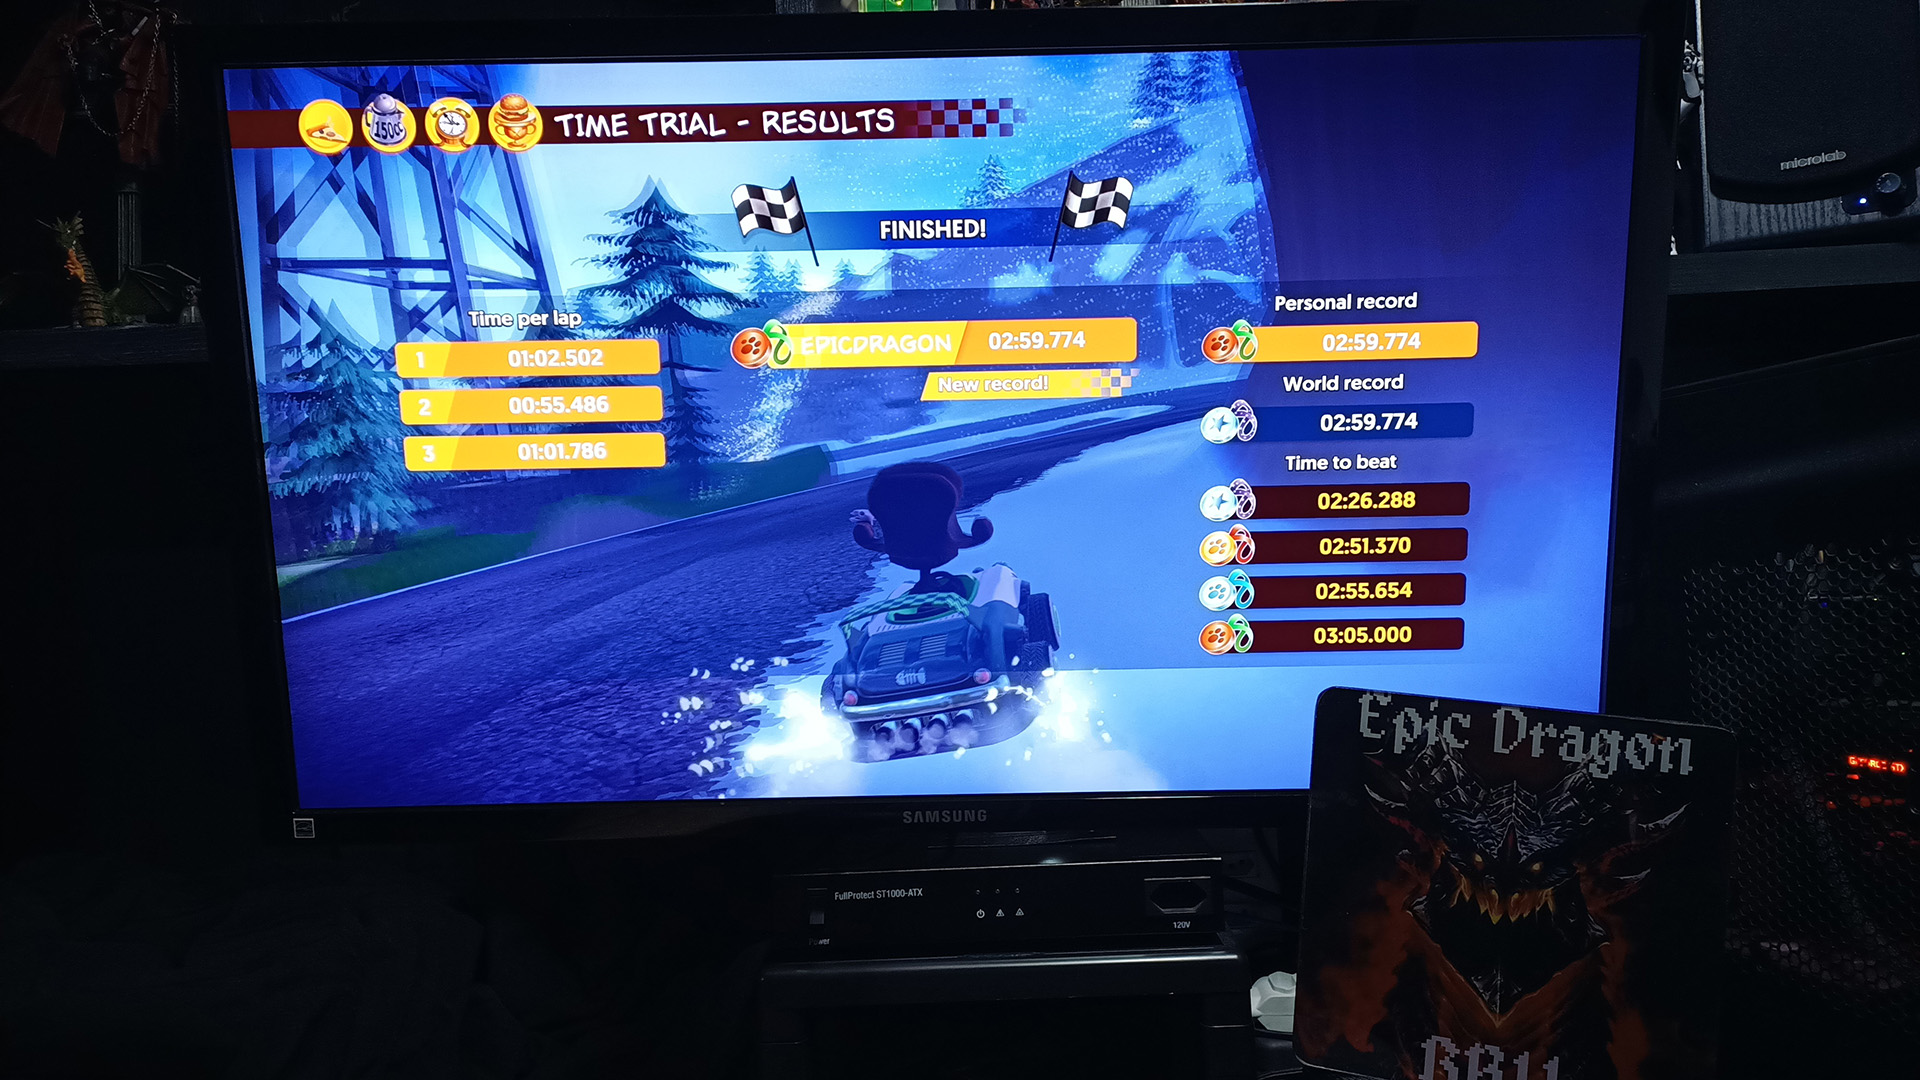 EpicDragon: Garfield Kart Furious Racing: Sneak-A-Peak [Time Trial: Lap Time] (PC) 0:00:55.486 points on 2022-08-14 14:58:20